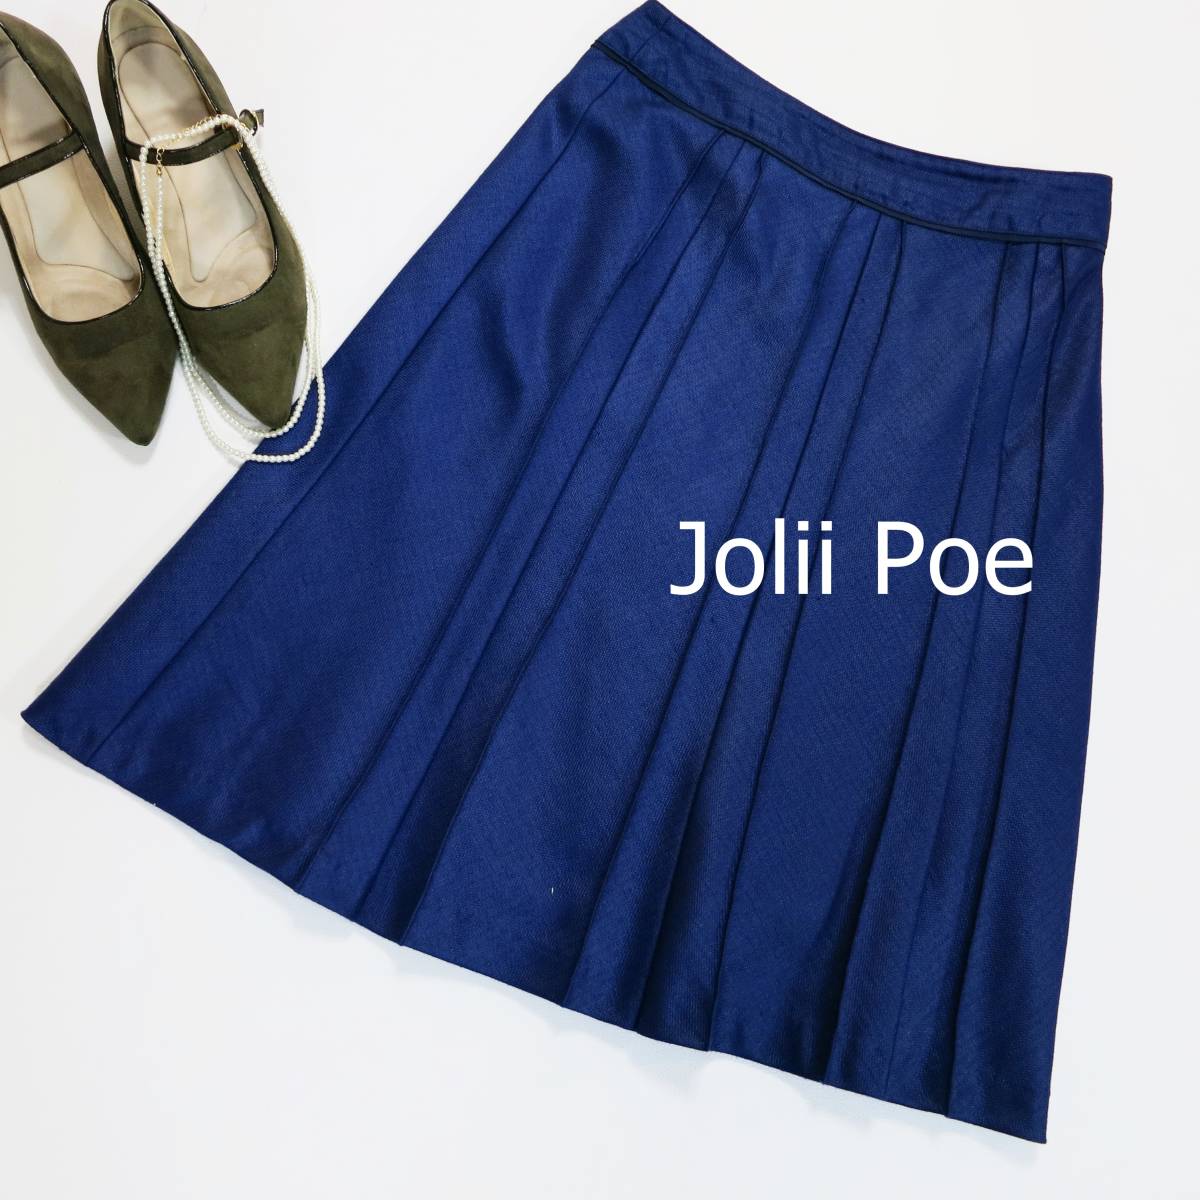 Jolii Poe フレアスカート サイズ67-93 ネイビー 紺 ひざ下丈 プリーツ サイドチャック 裏地有 日本製 シンプル ボックススカート 4085_画像1